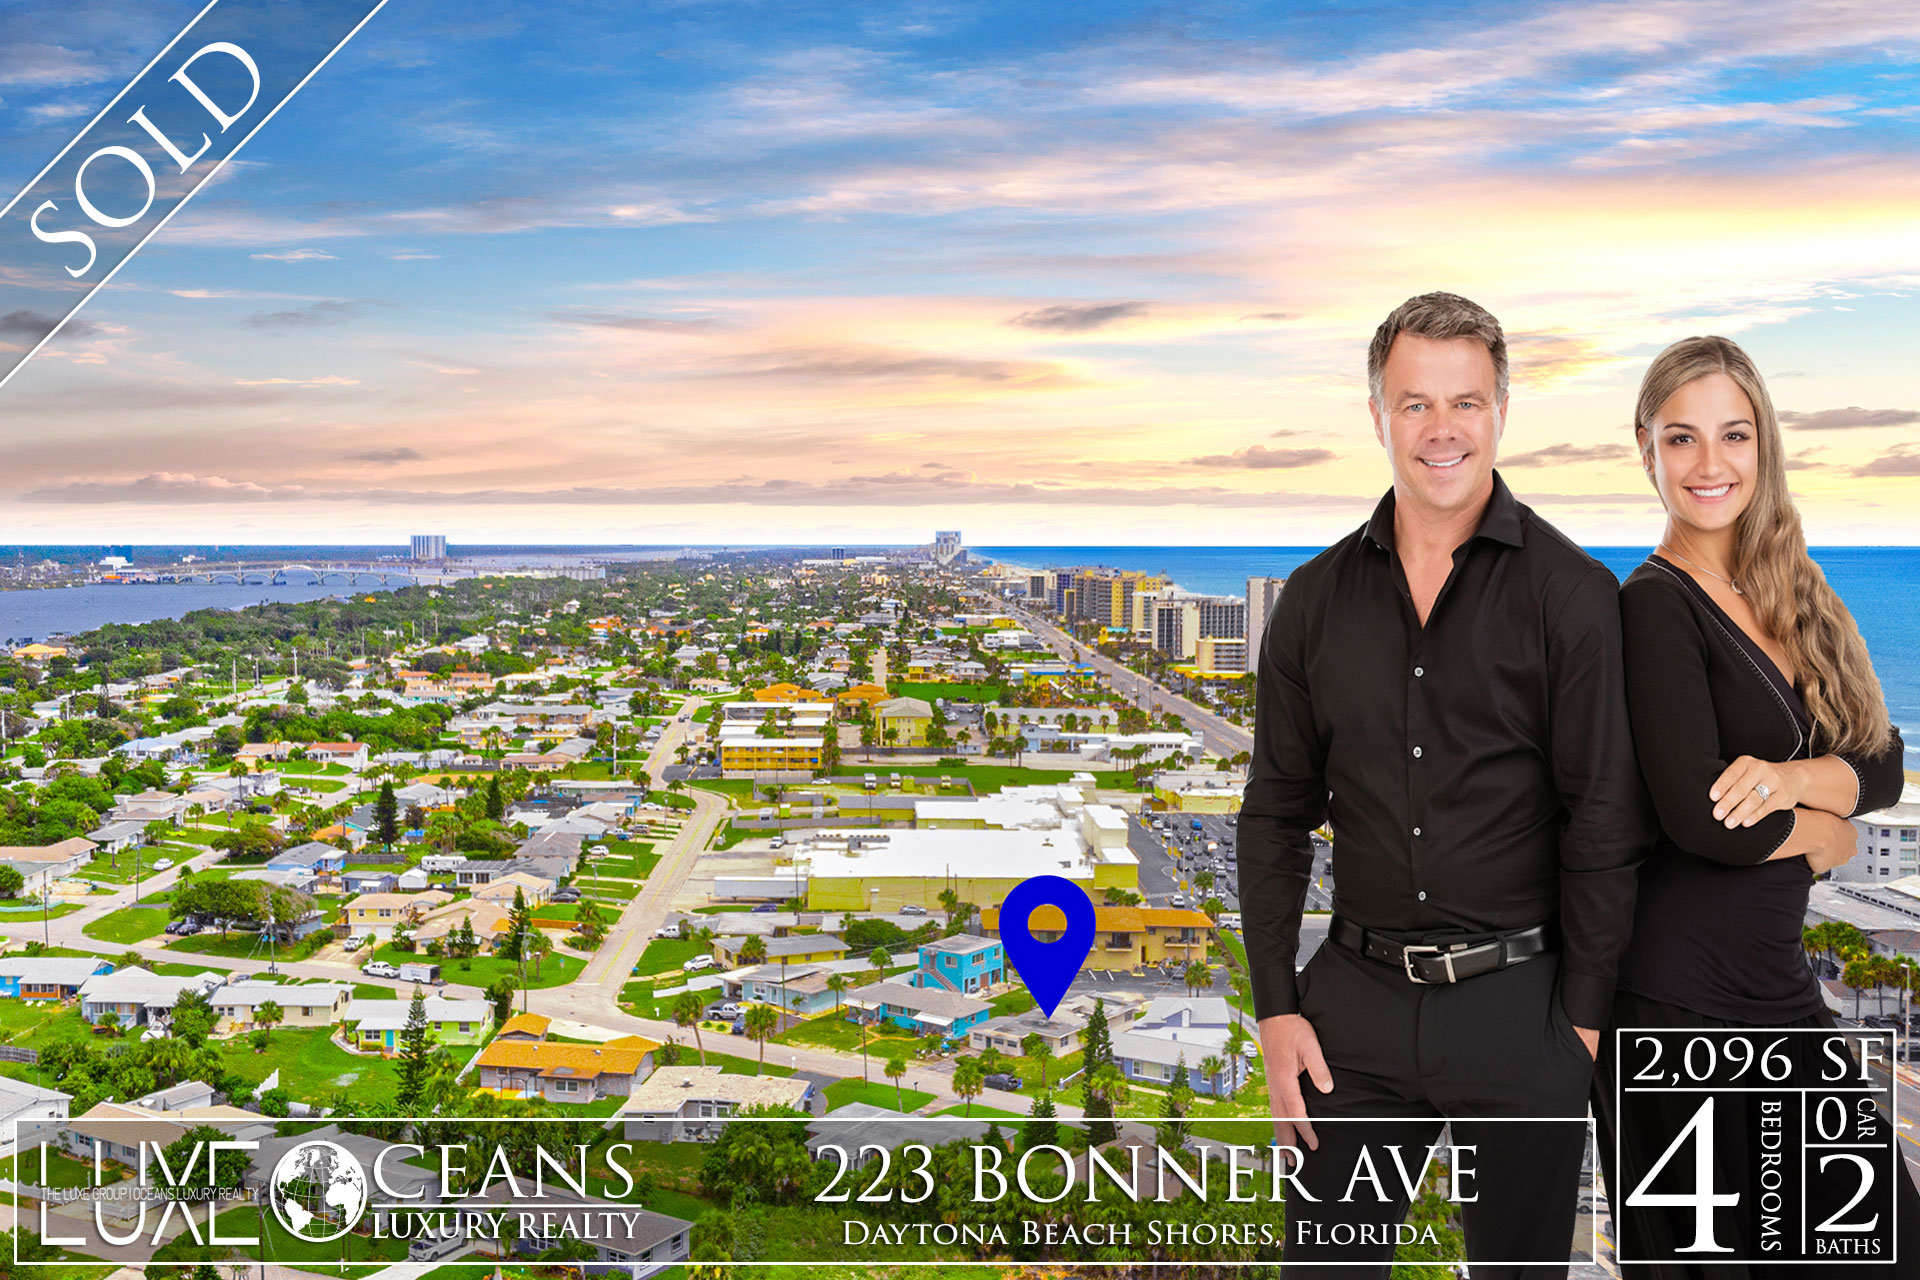 Daytona Beach Shores Homes For Sale.  Just Sold 223 Bonner Ave Daytona Beach Shores, FL 